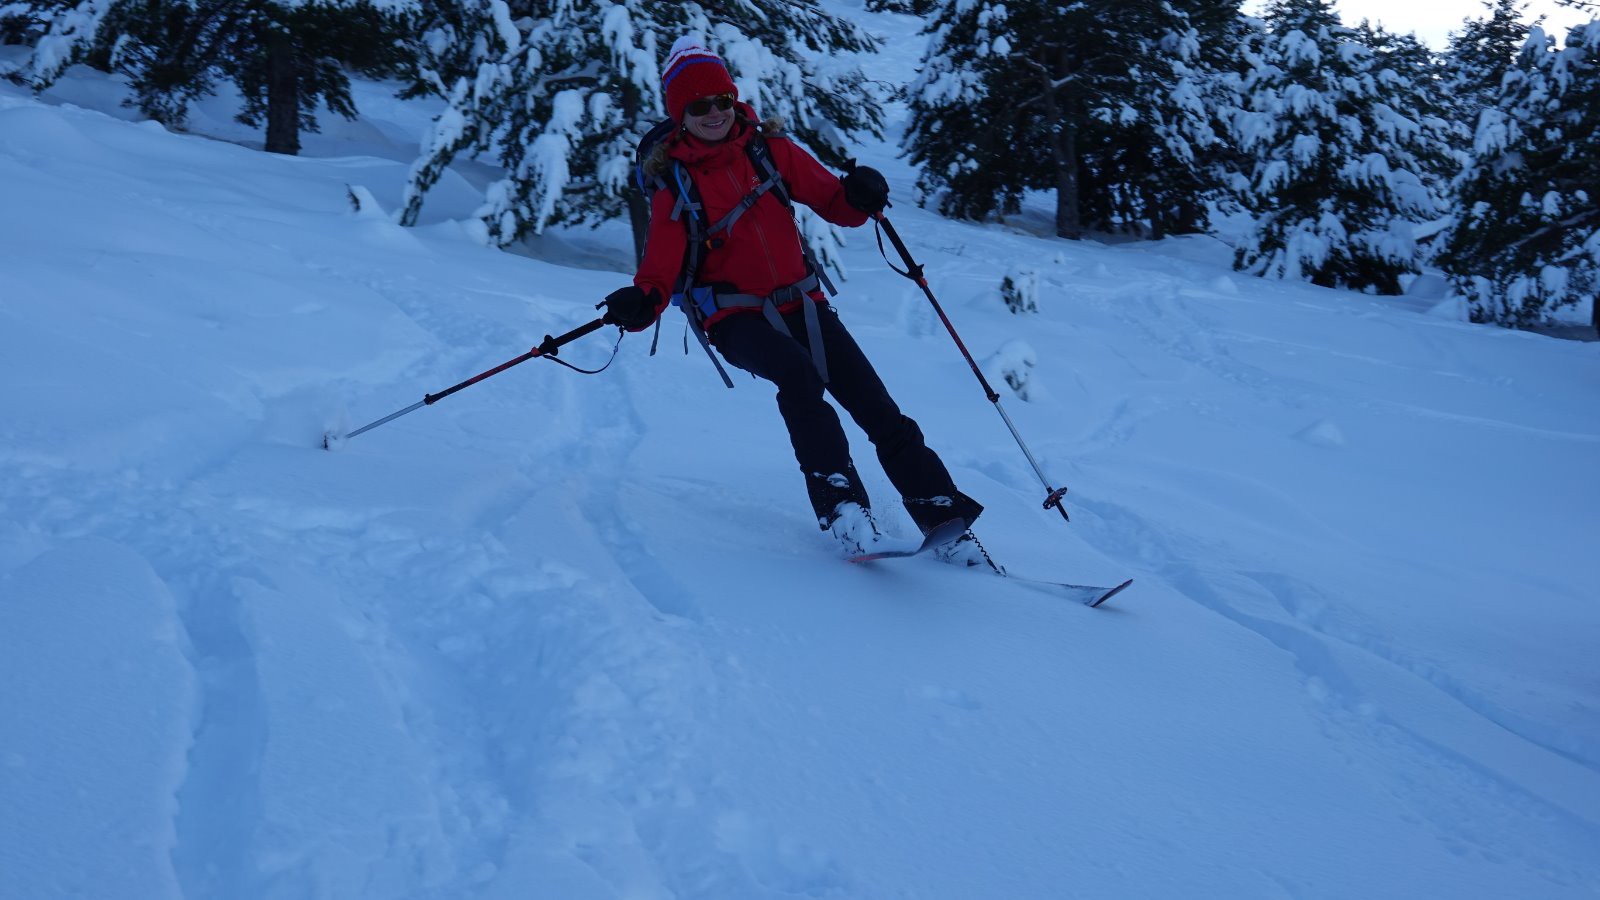 Maryline contente de ressortir les skis